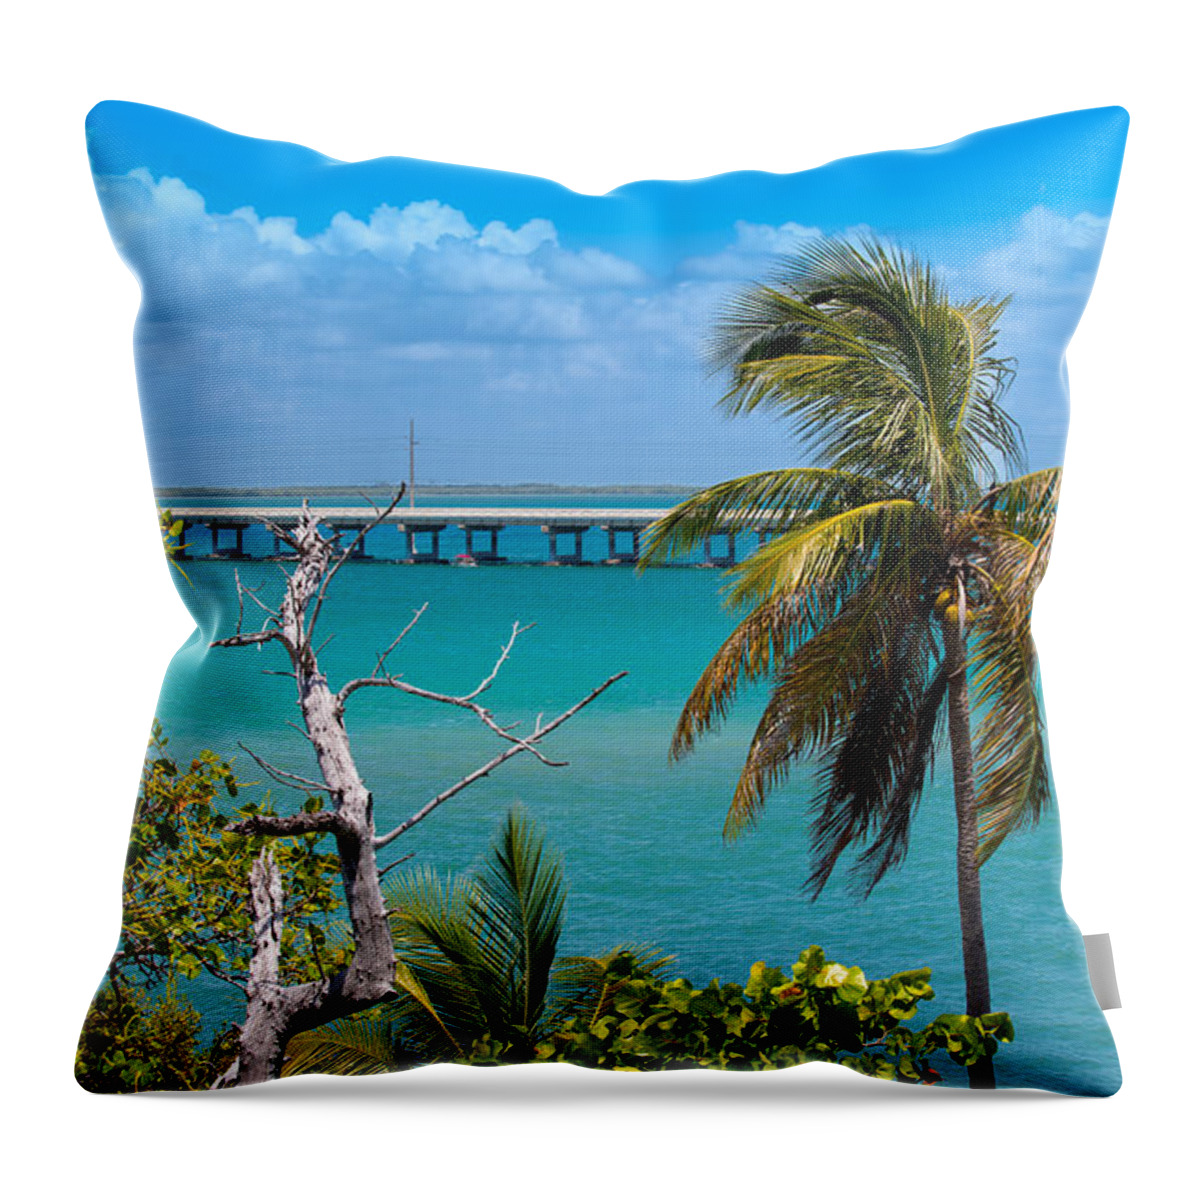 Florida Keys Throw Pillow featuring the photograph Bahia Honda Lookout by John M Bailey